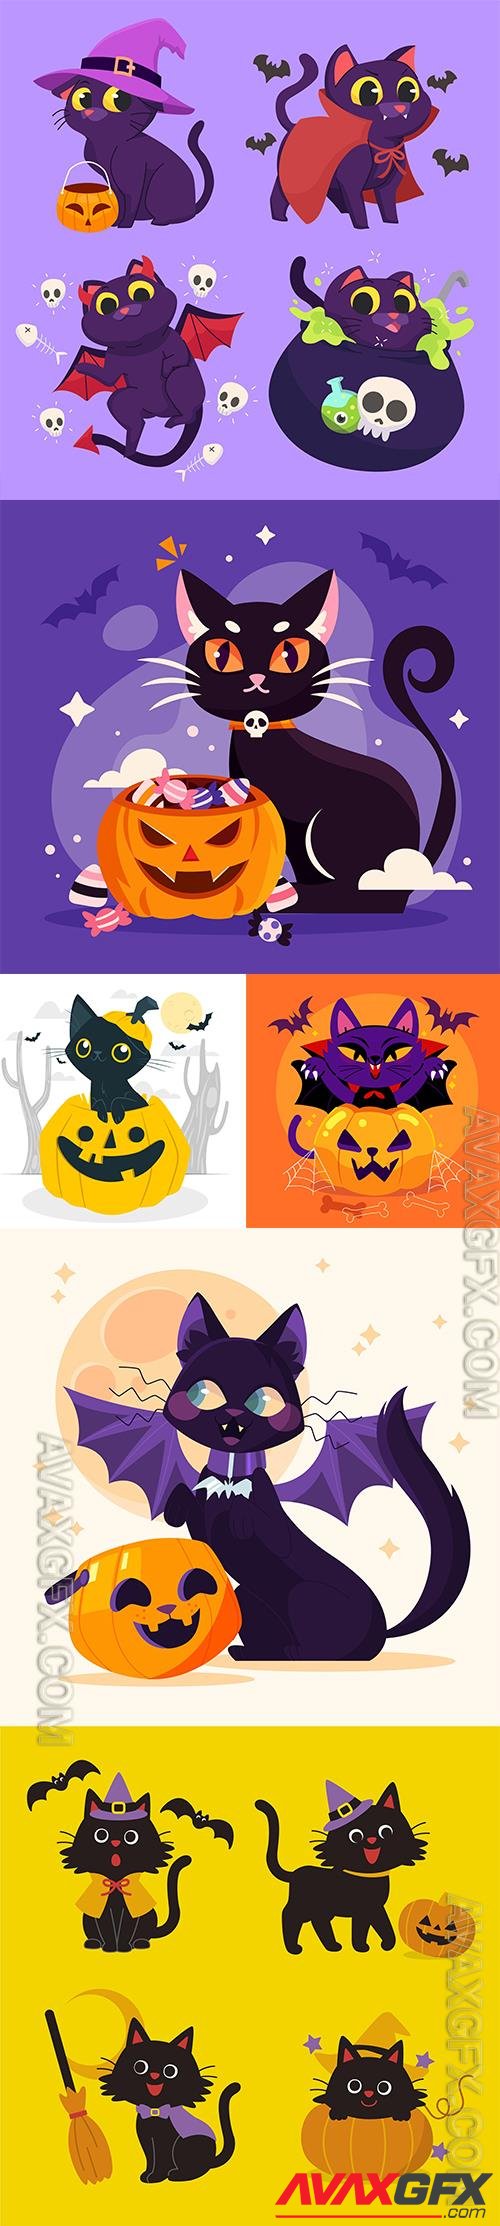 Hand-drawn flat halloween cats illustrations vol 2